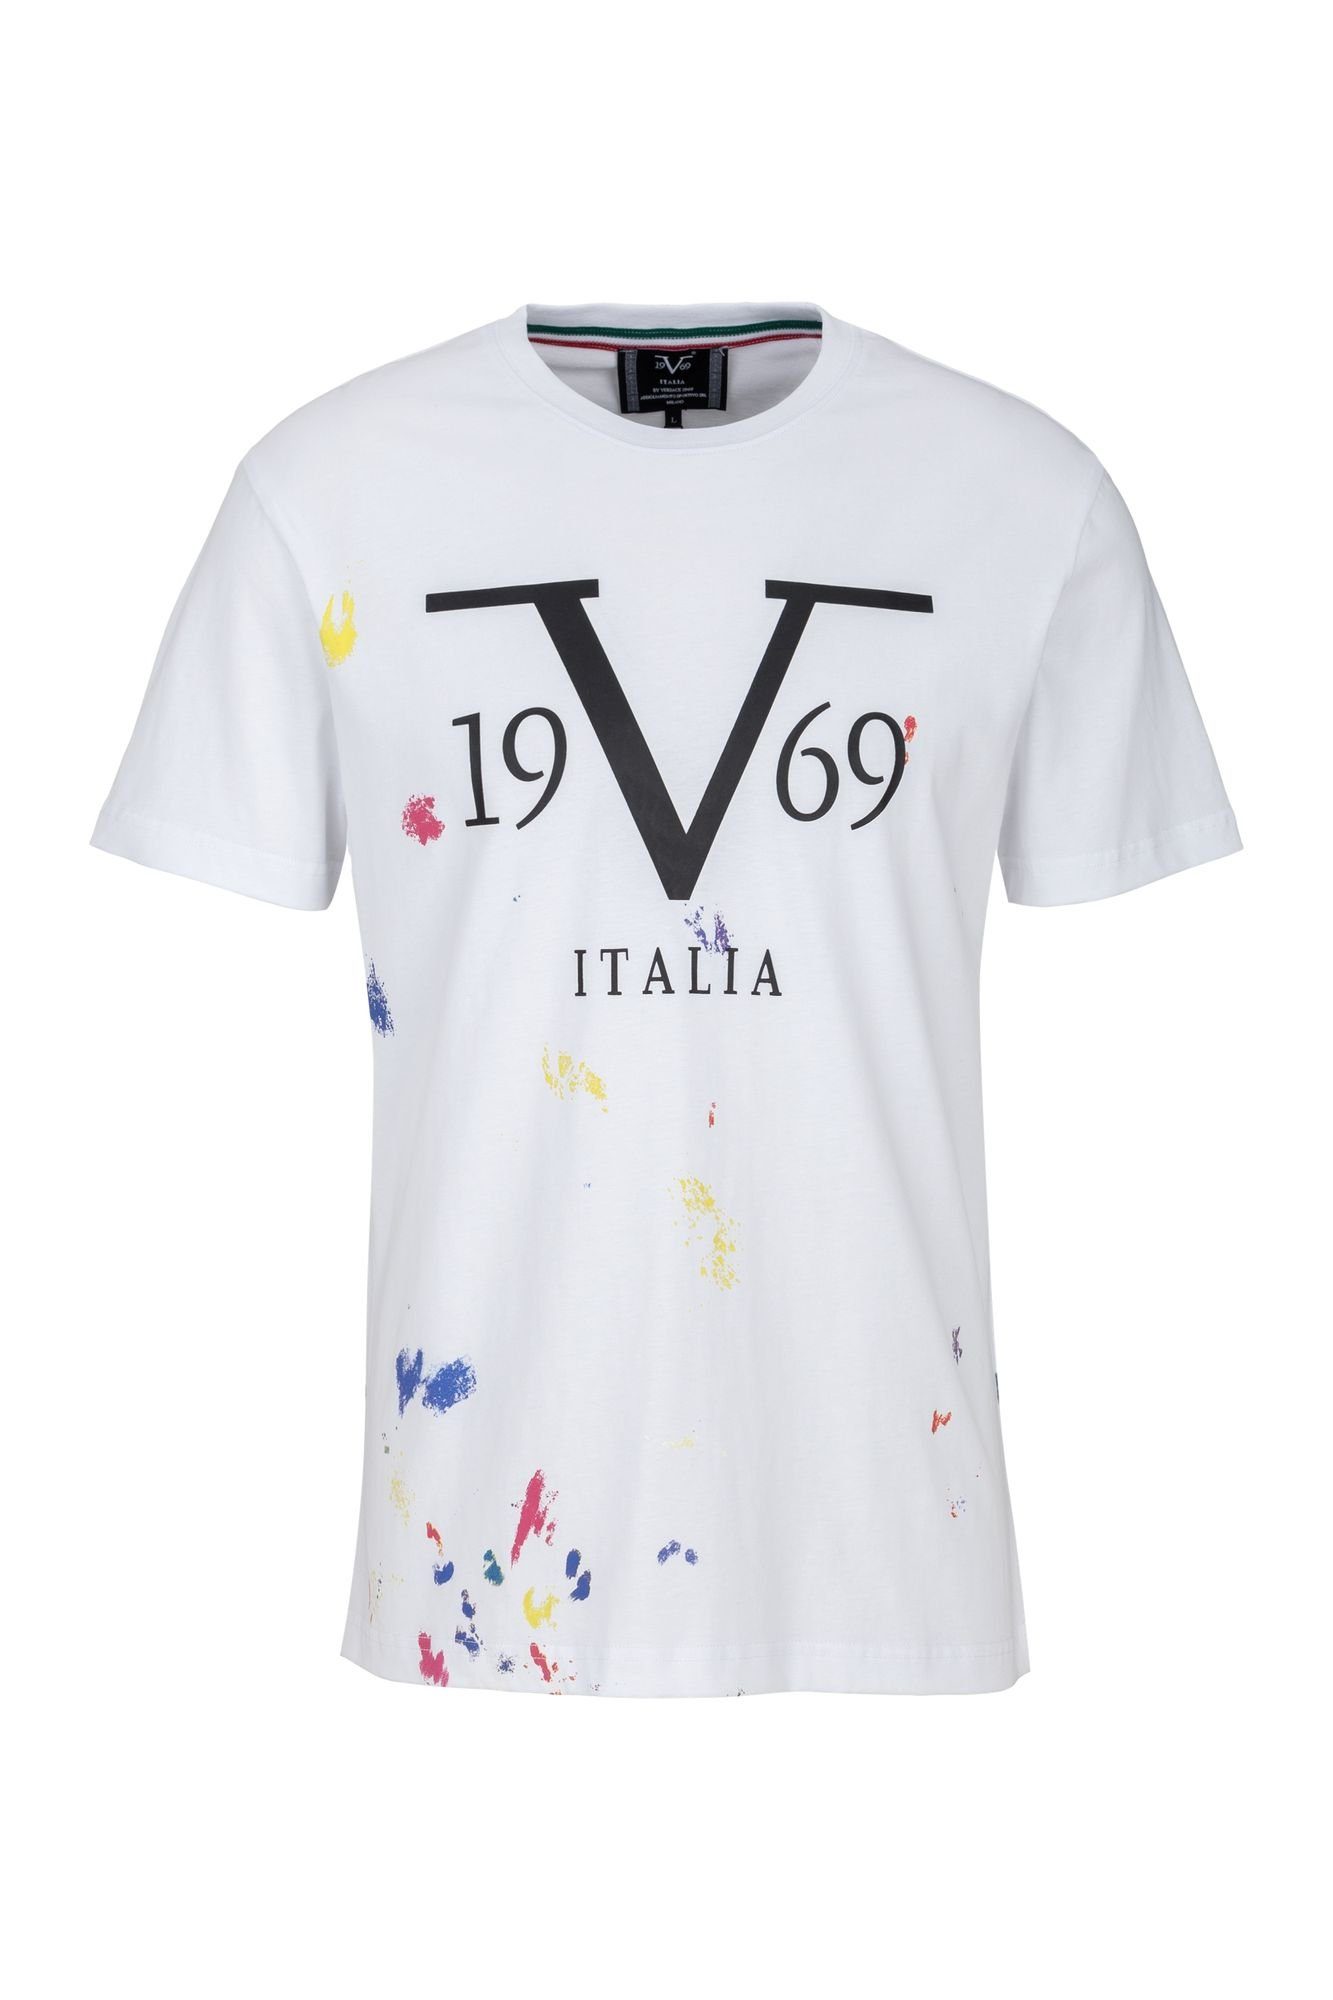 19V69 Italia by by Versace - Rundhalsshirt SRL Versace Sportivo Leonardo